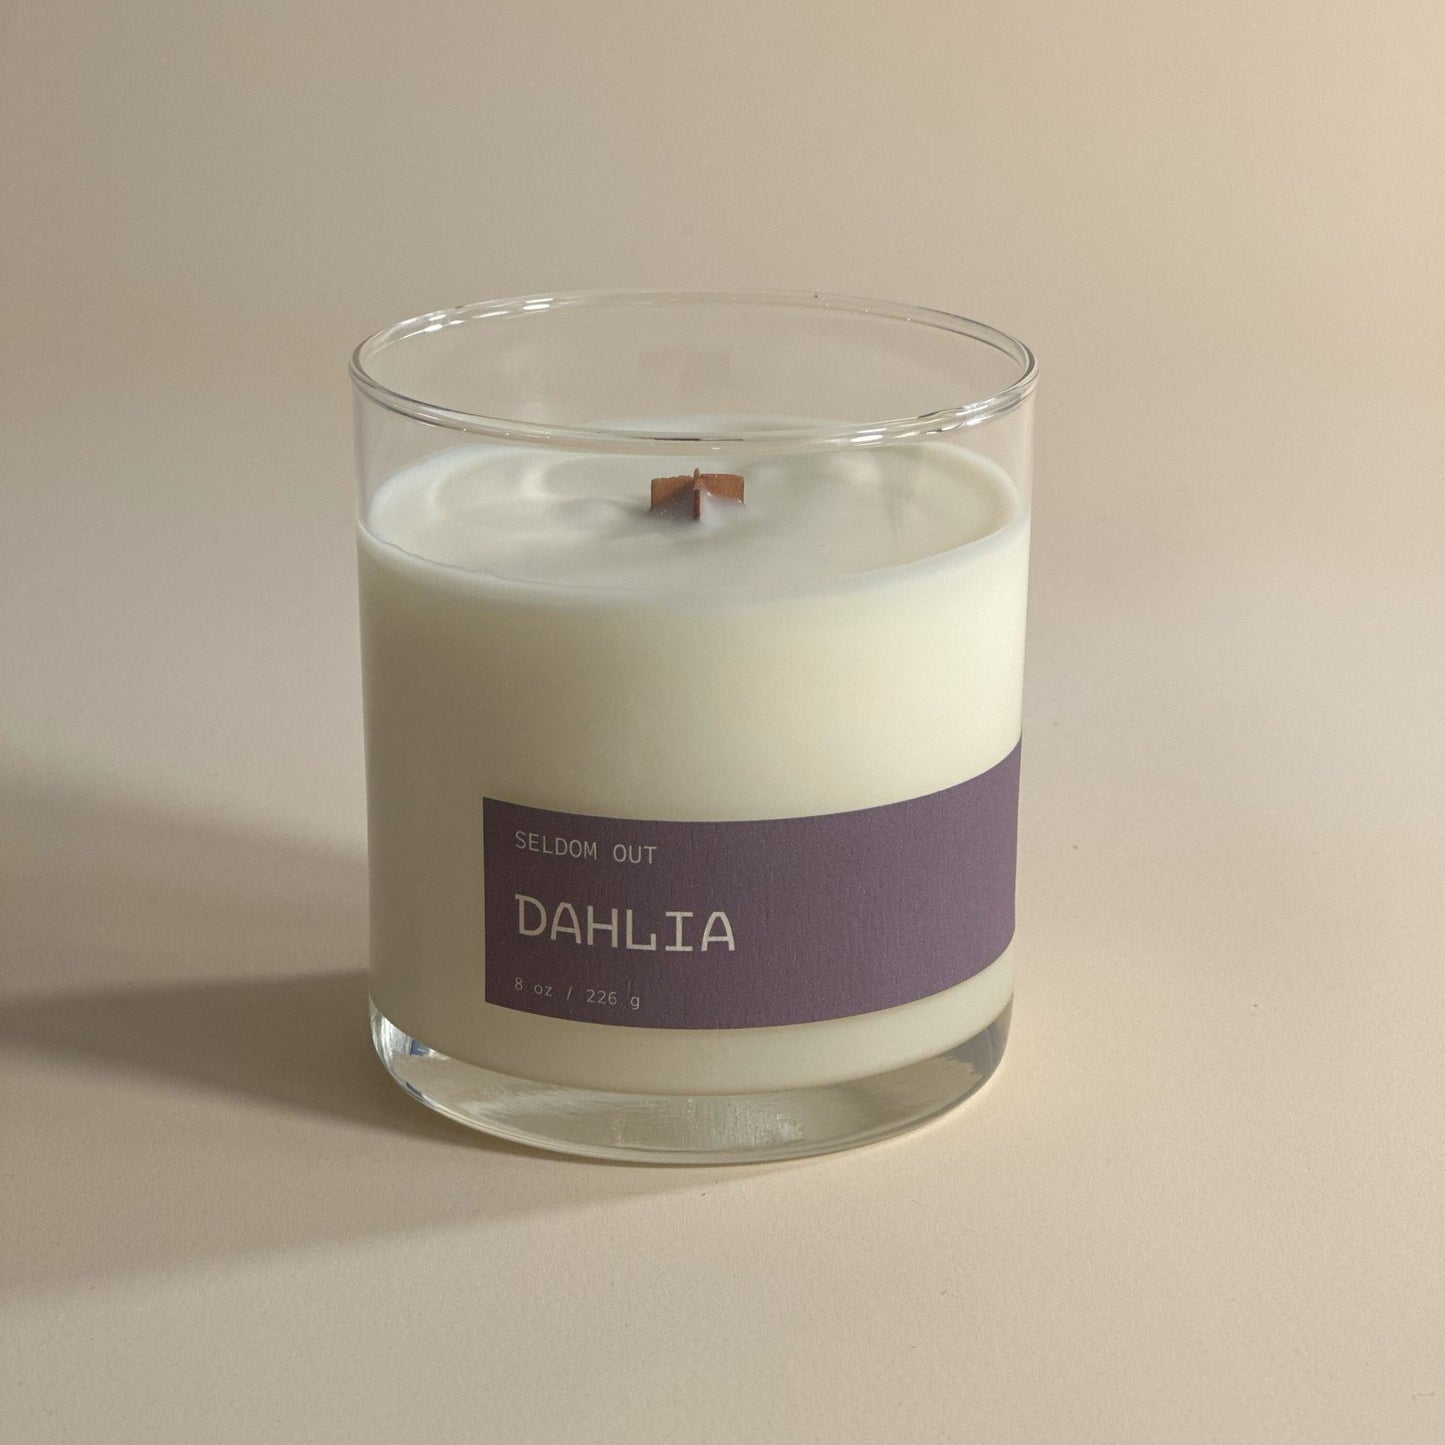 Dahlia - 8oz Candle